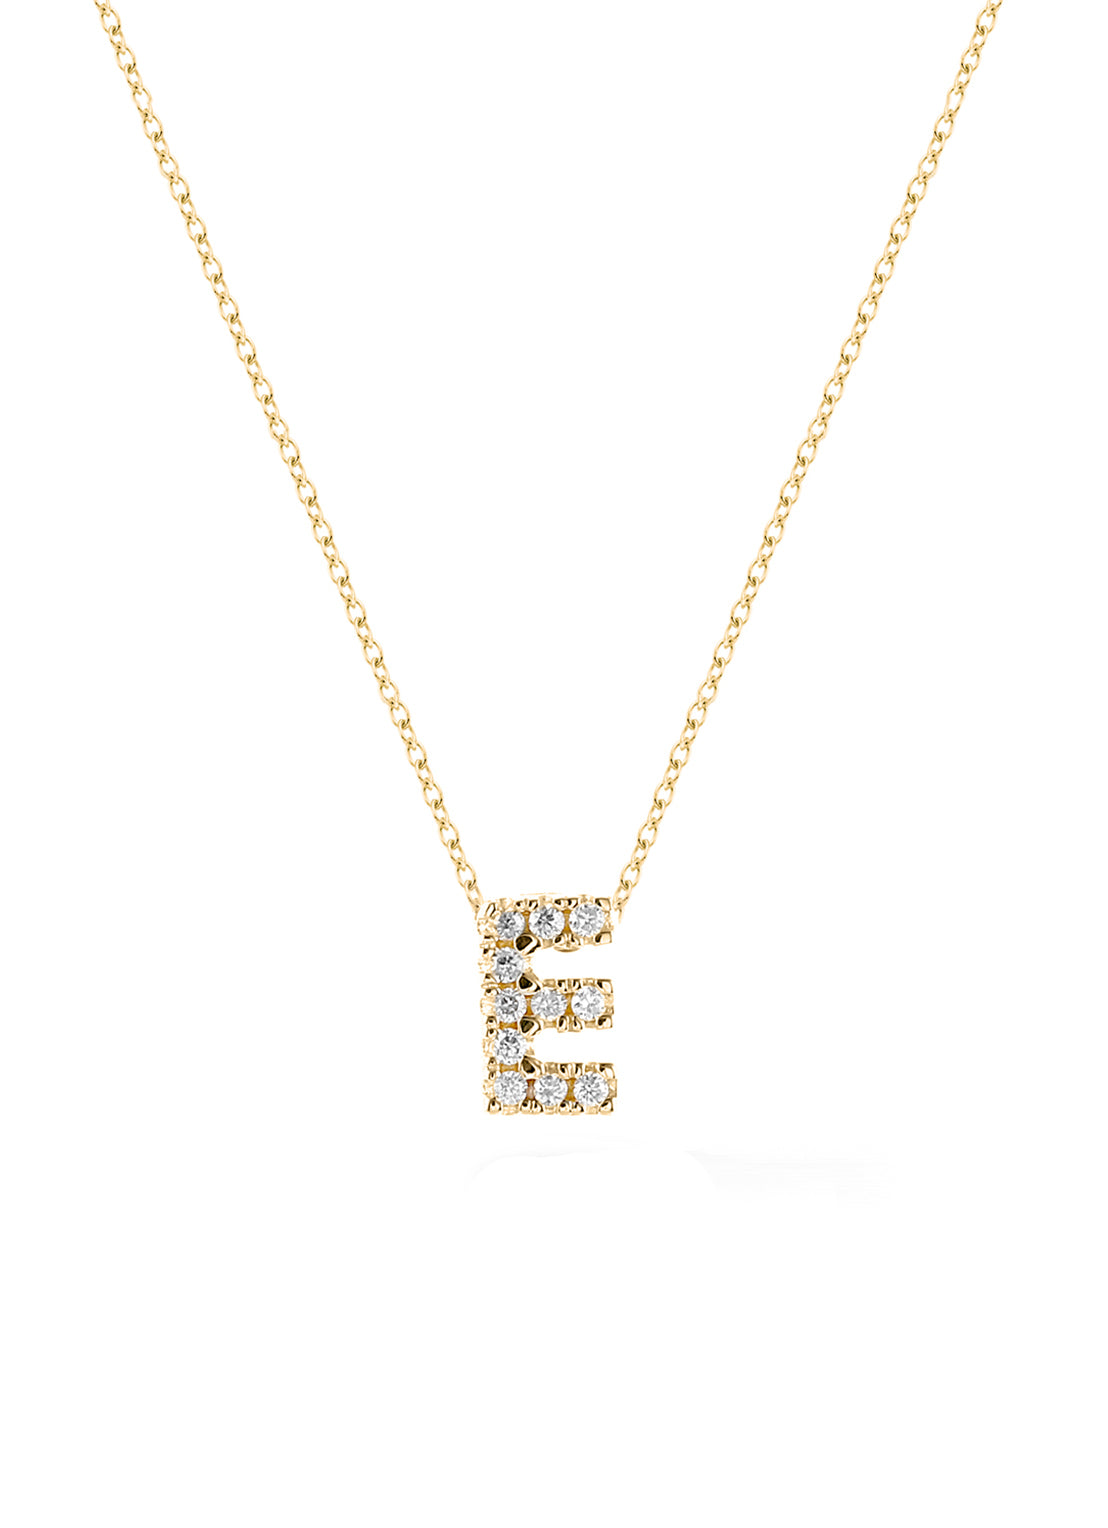 Yellow gold pendant, 0.02 ct diamond, alphabet